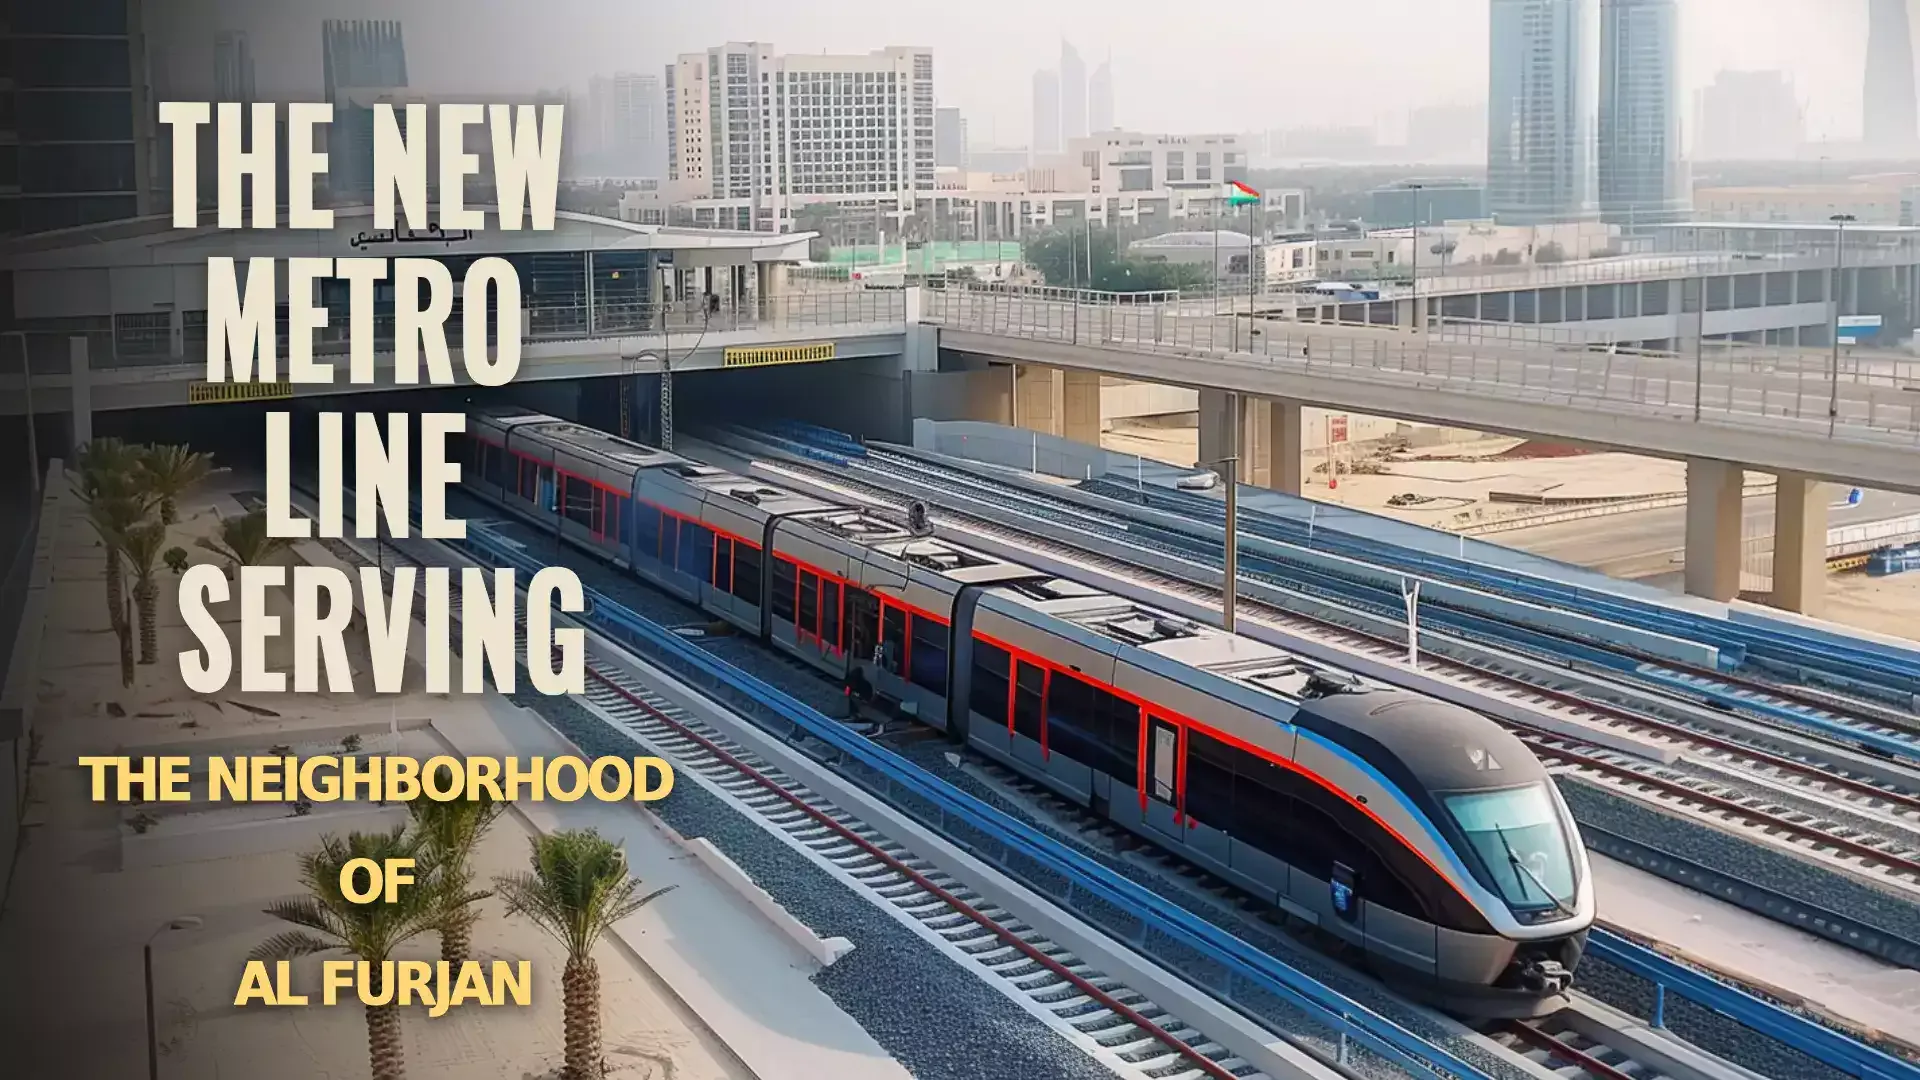 Image showing the newly constructed metro line serving Al Furjan, Dubai